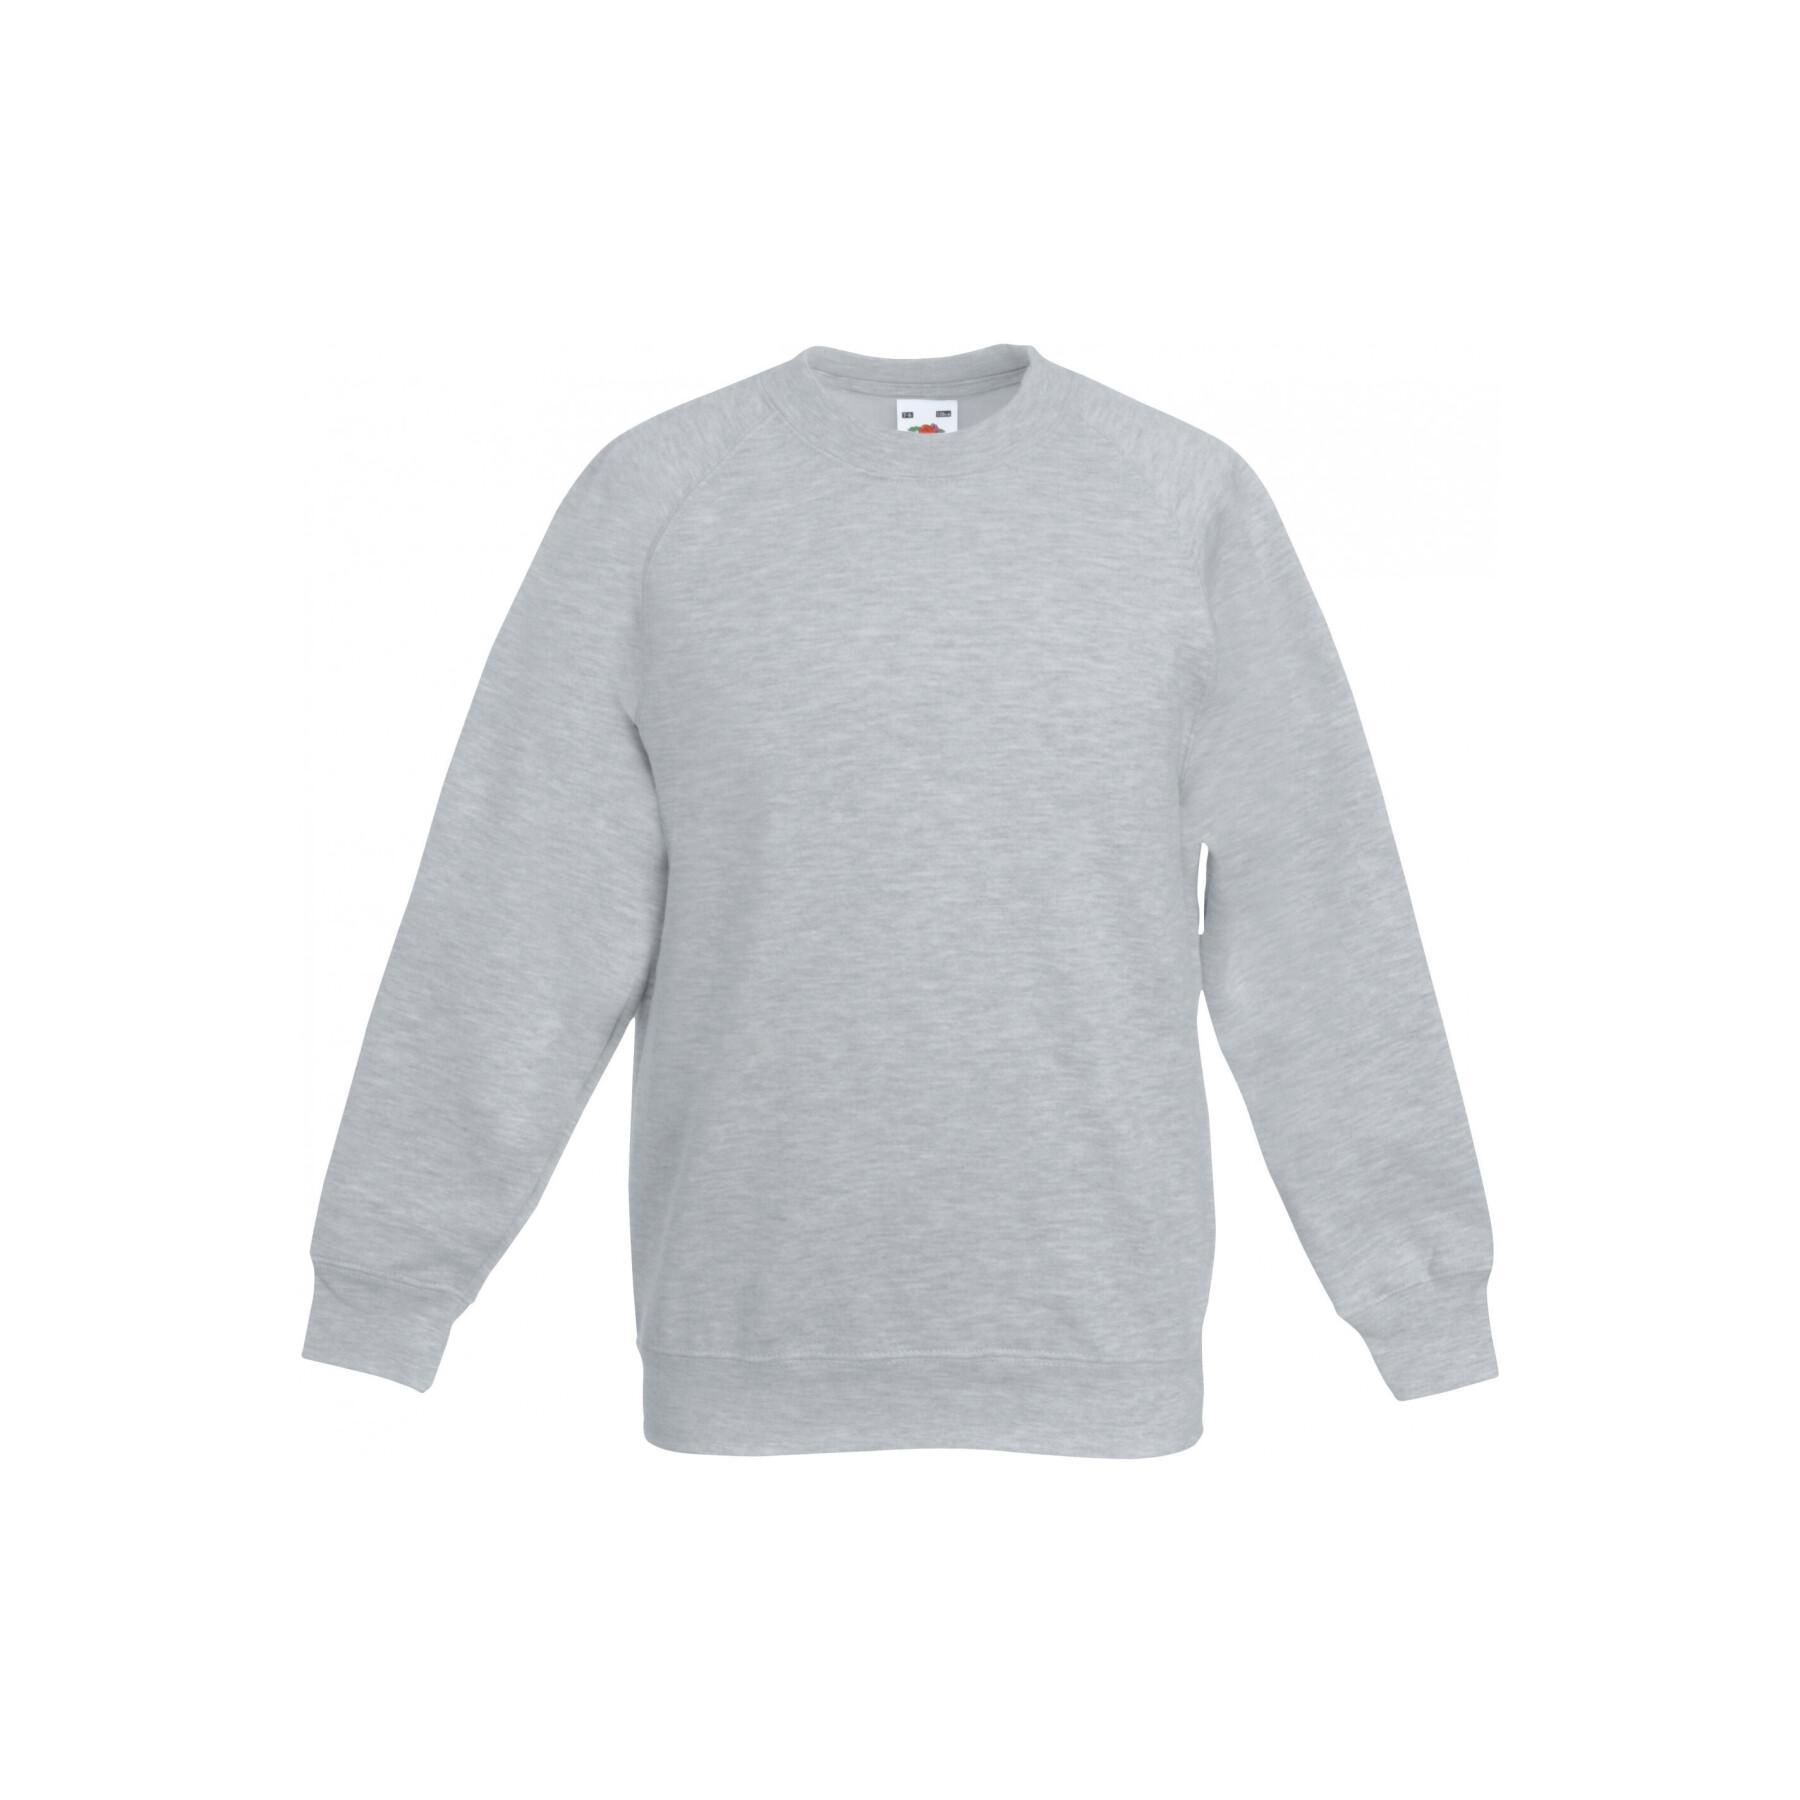 Sweatshirt raglan sleeves child Fruit of the Loom 62-039-0